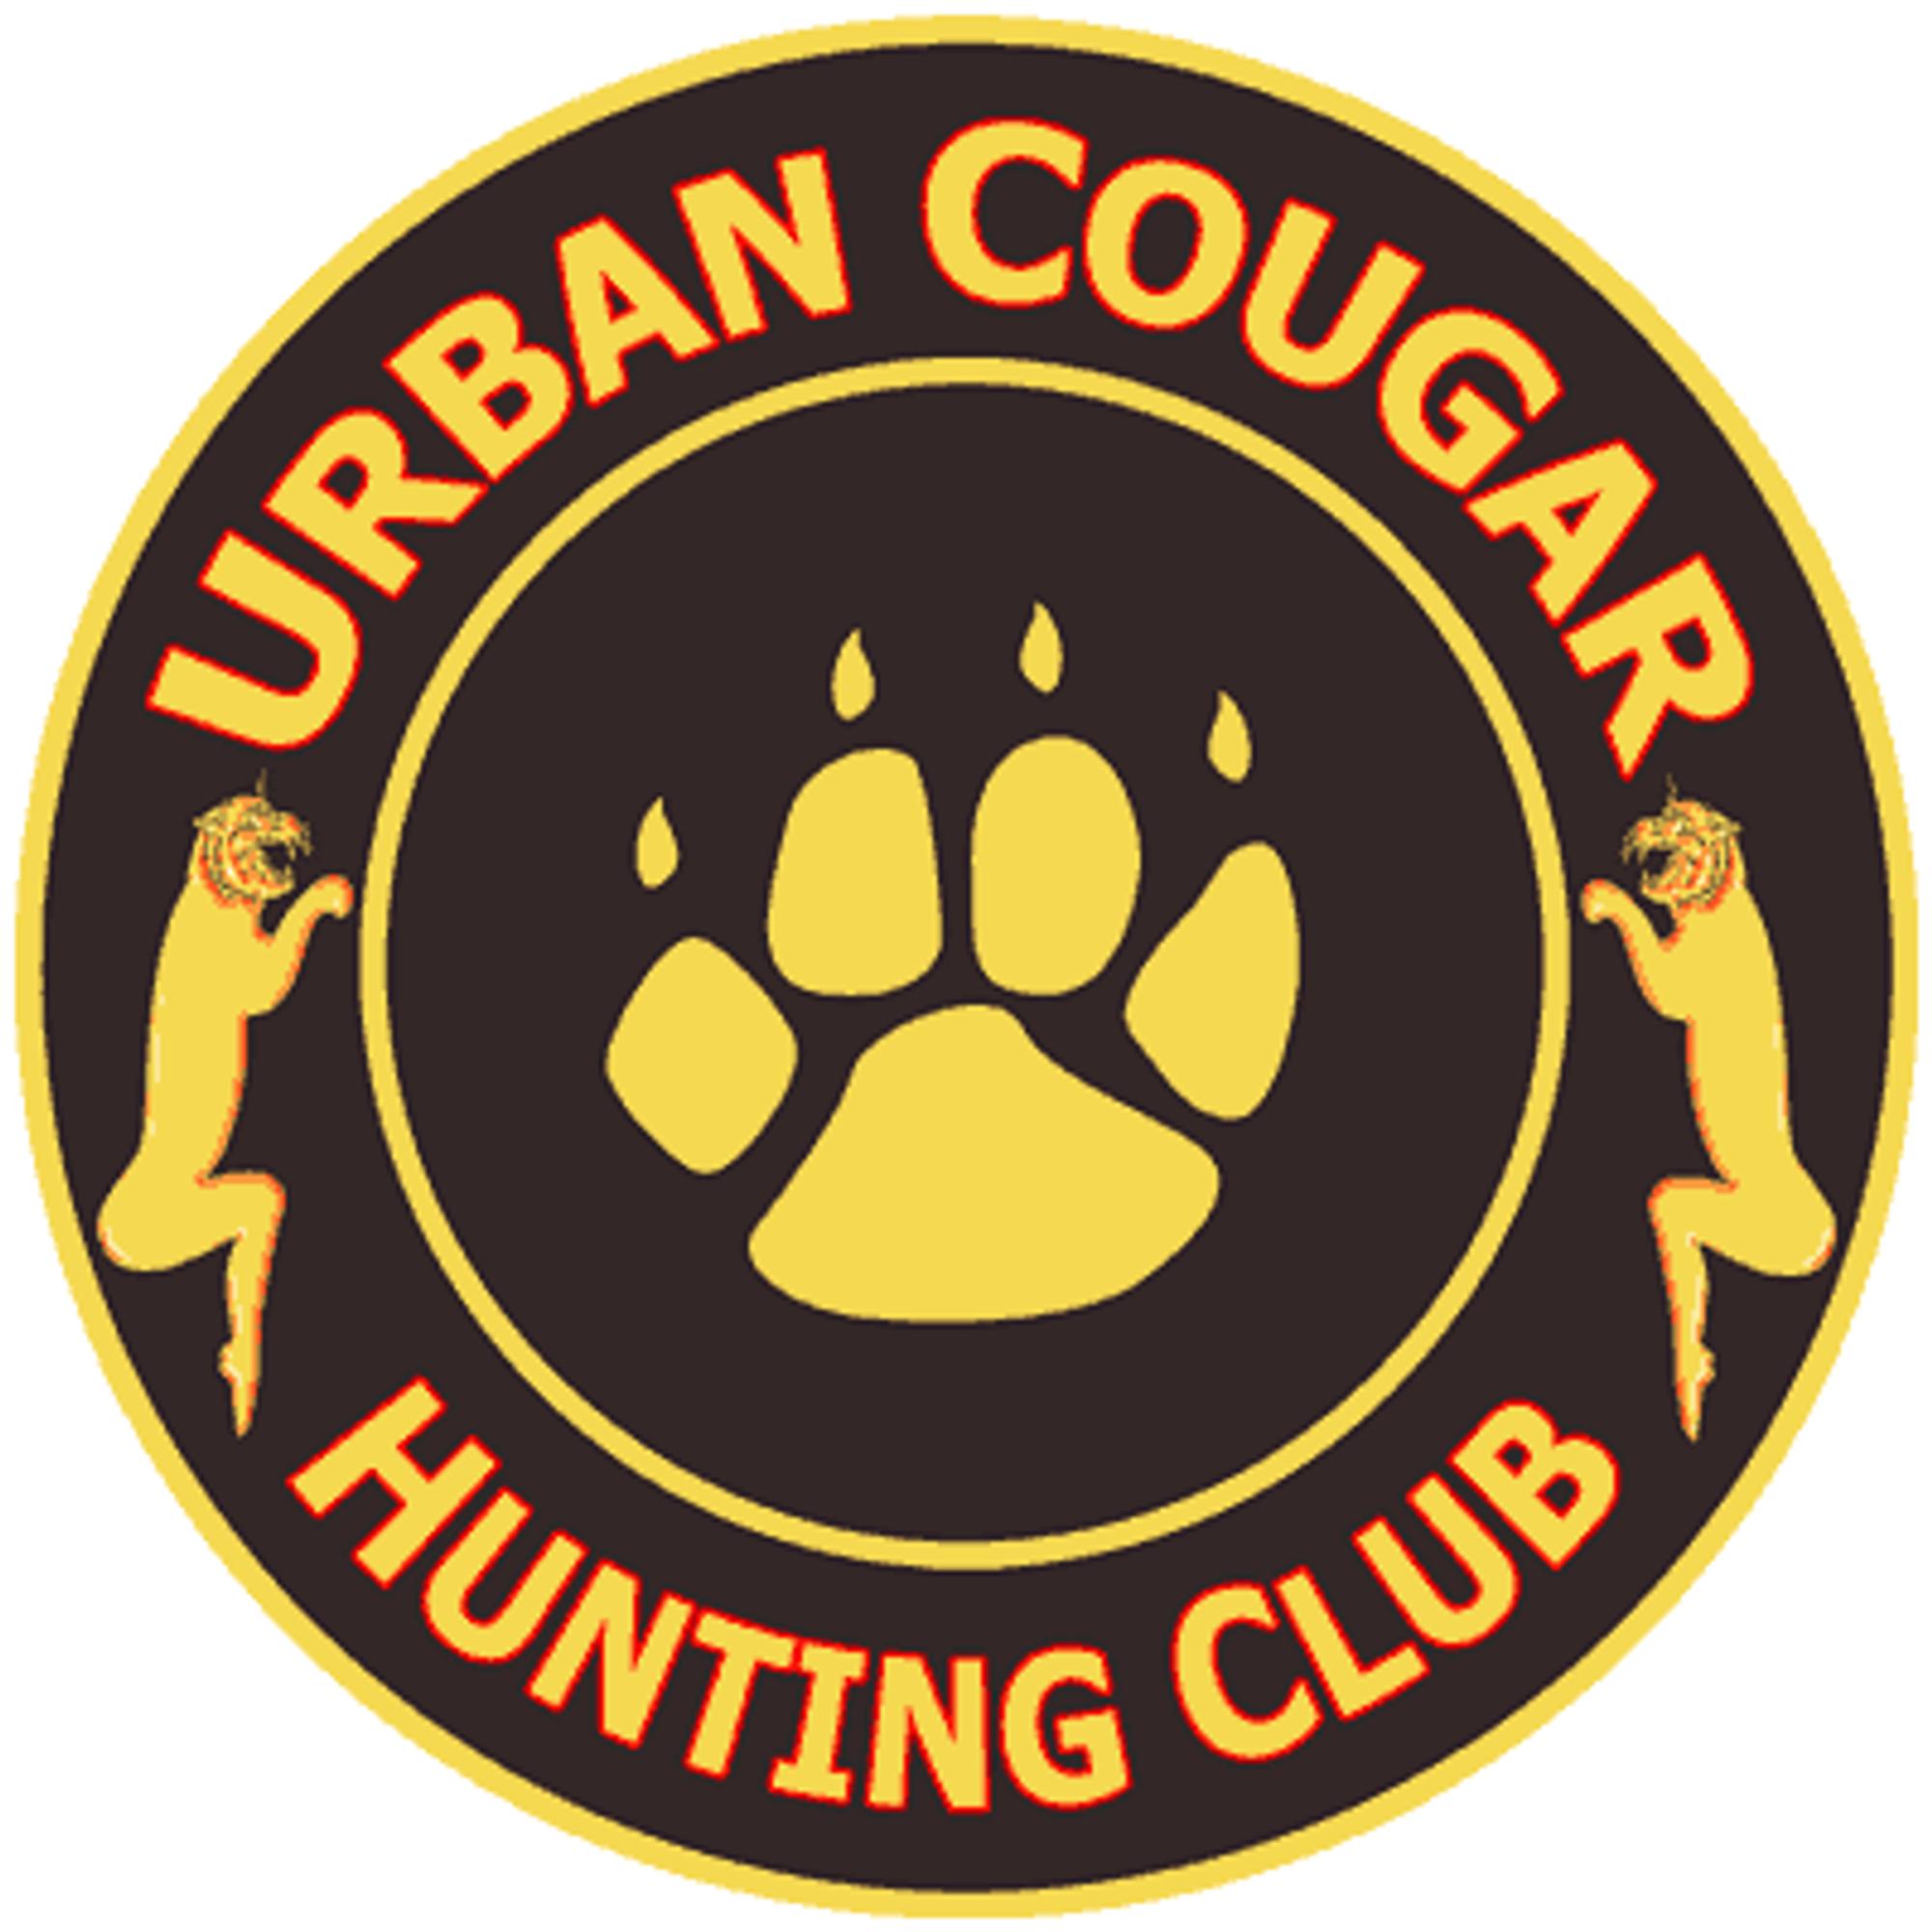 paras Cougar dating sites 2014